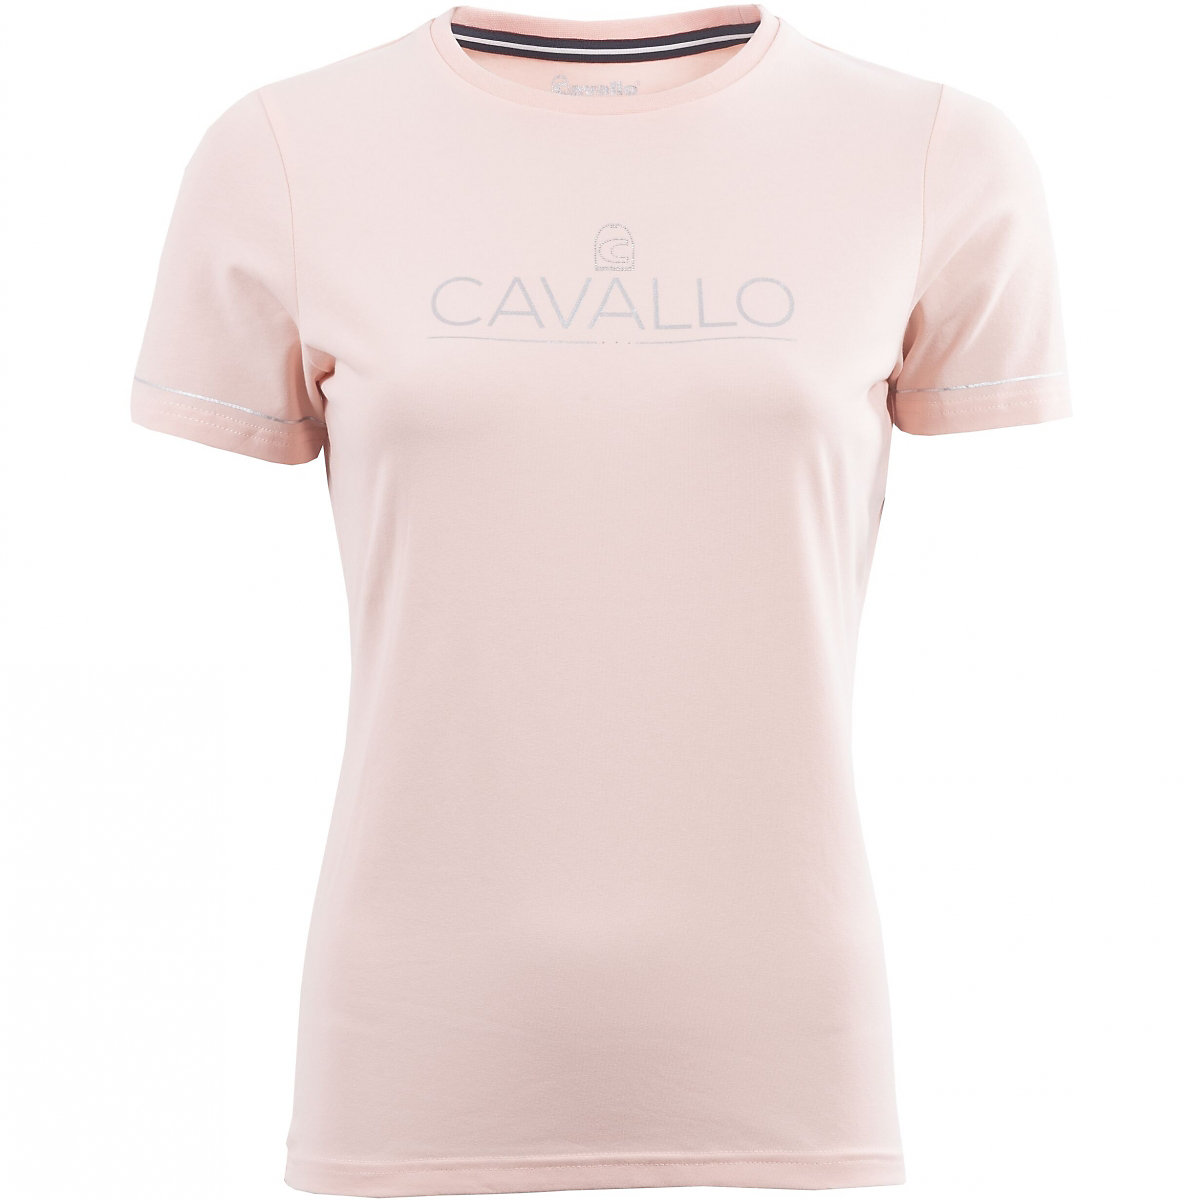 Cavallo Cavallo FERUN Auffälliges Damen T-Shirt bright salmon Sportswear FS 23 42 rosa